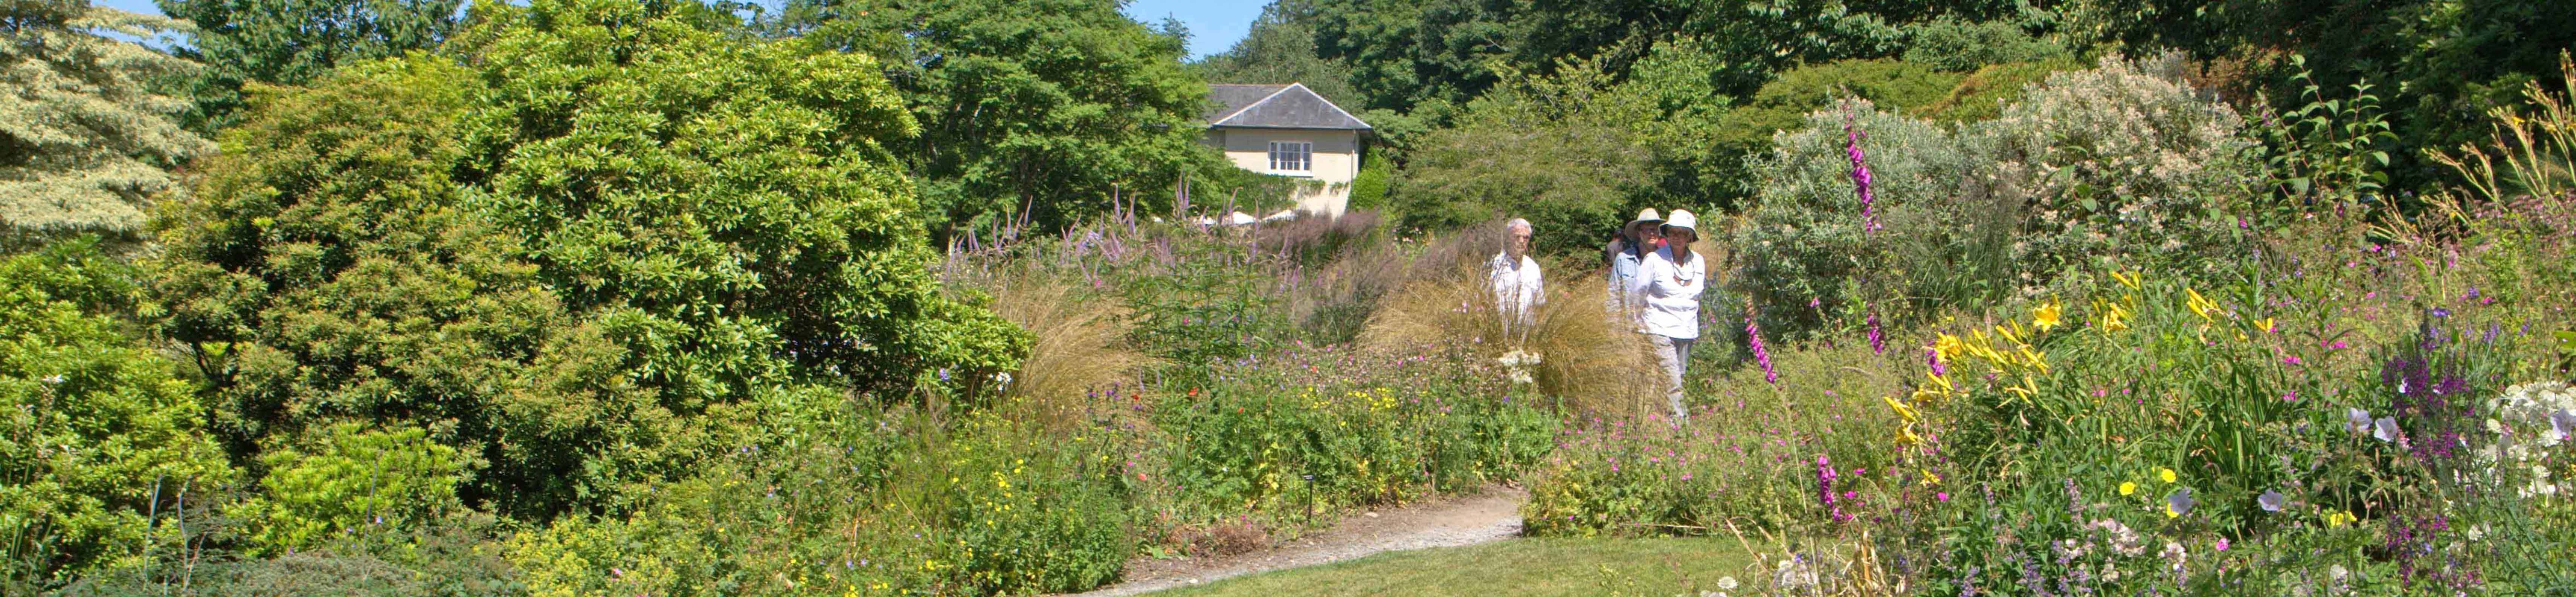 The Garden House near Buckland Monachorum